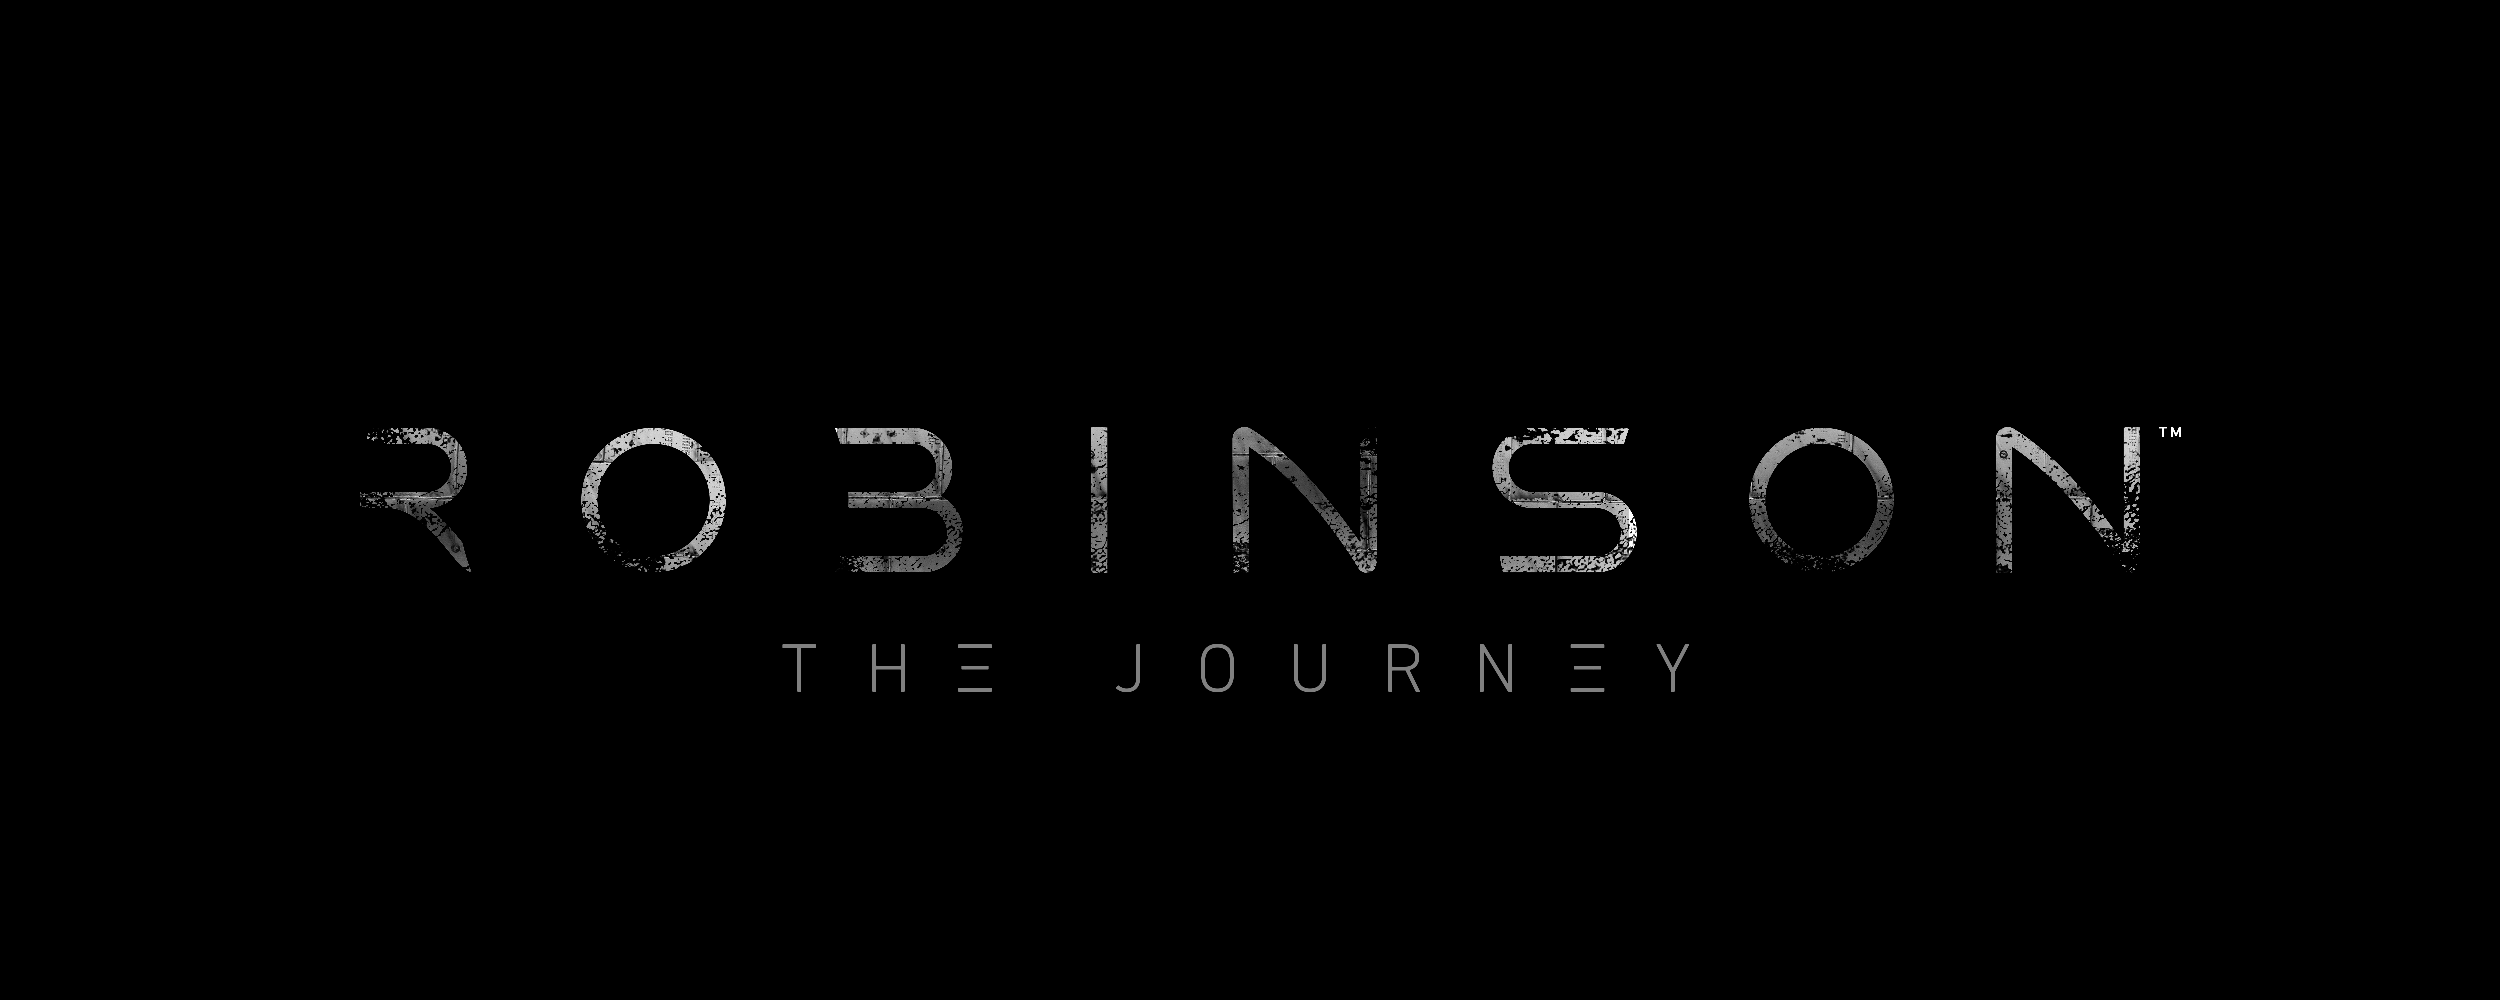 Robinson The Journey logo